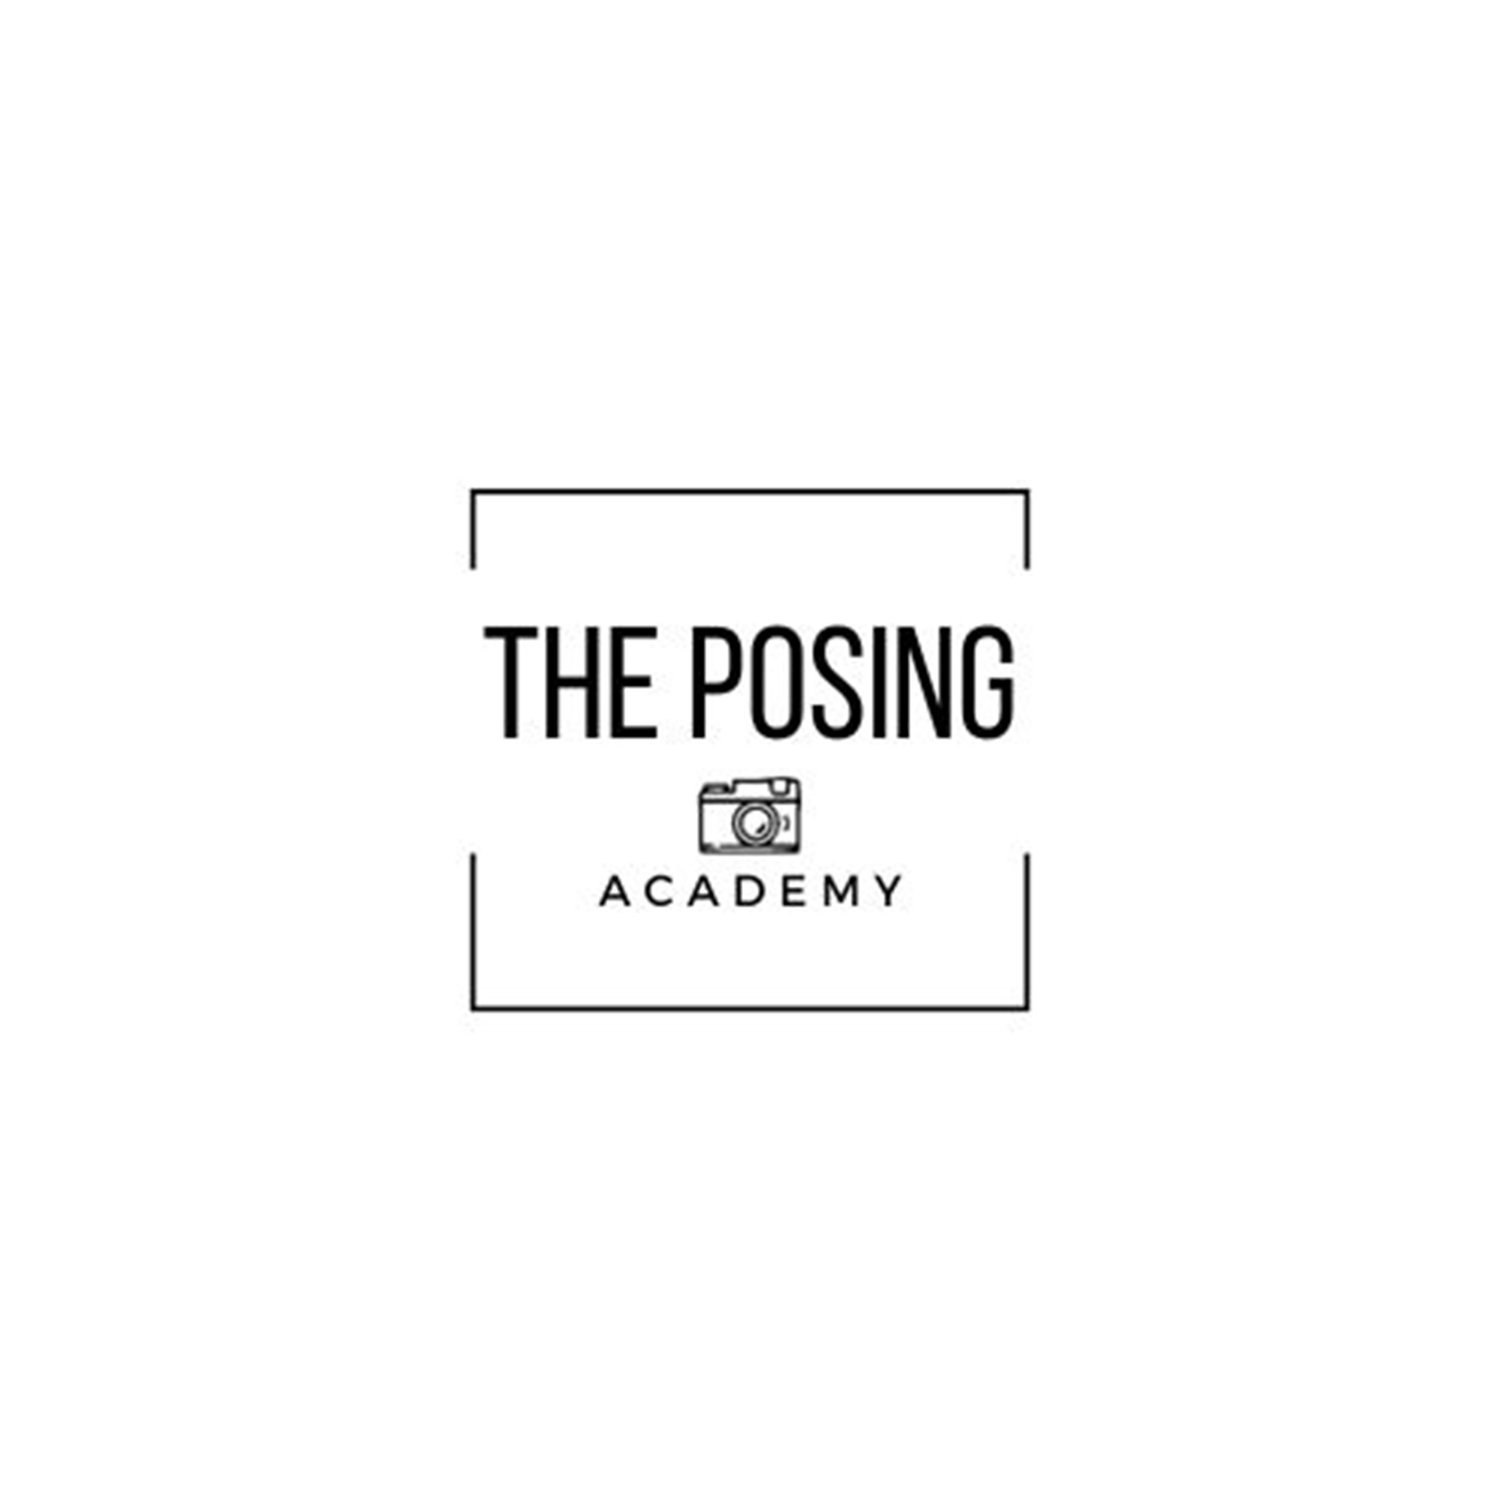 The Posing Academy